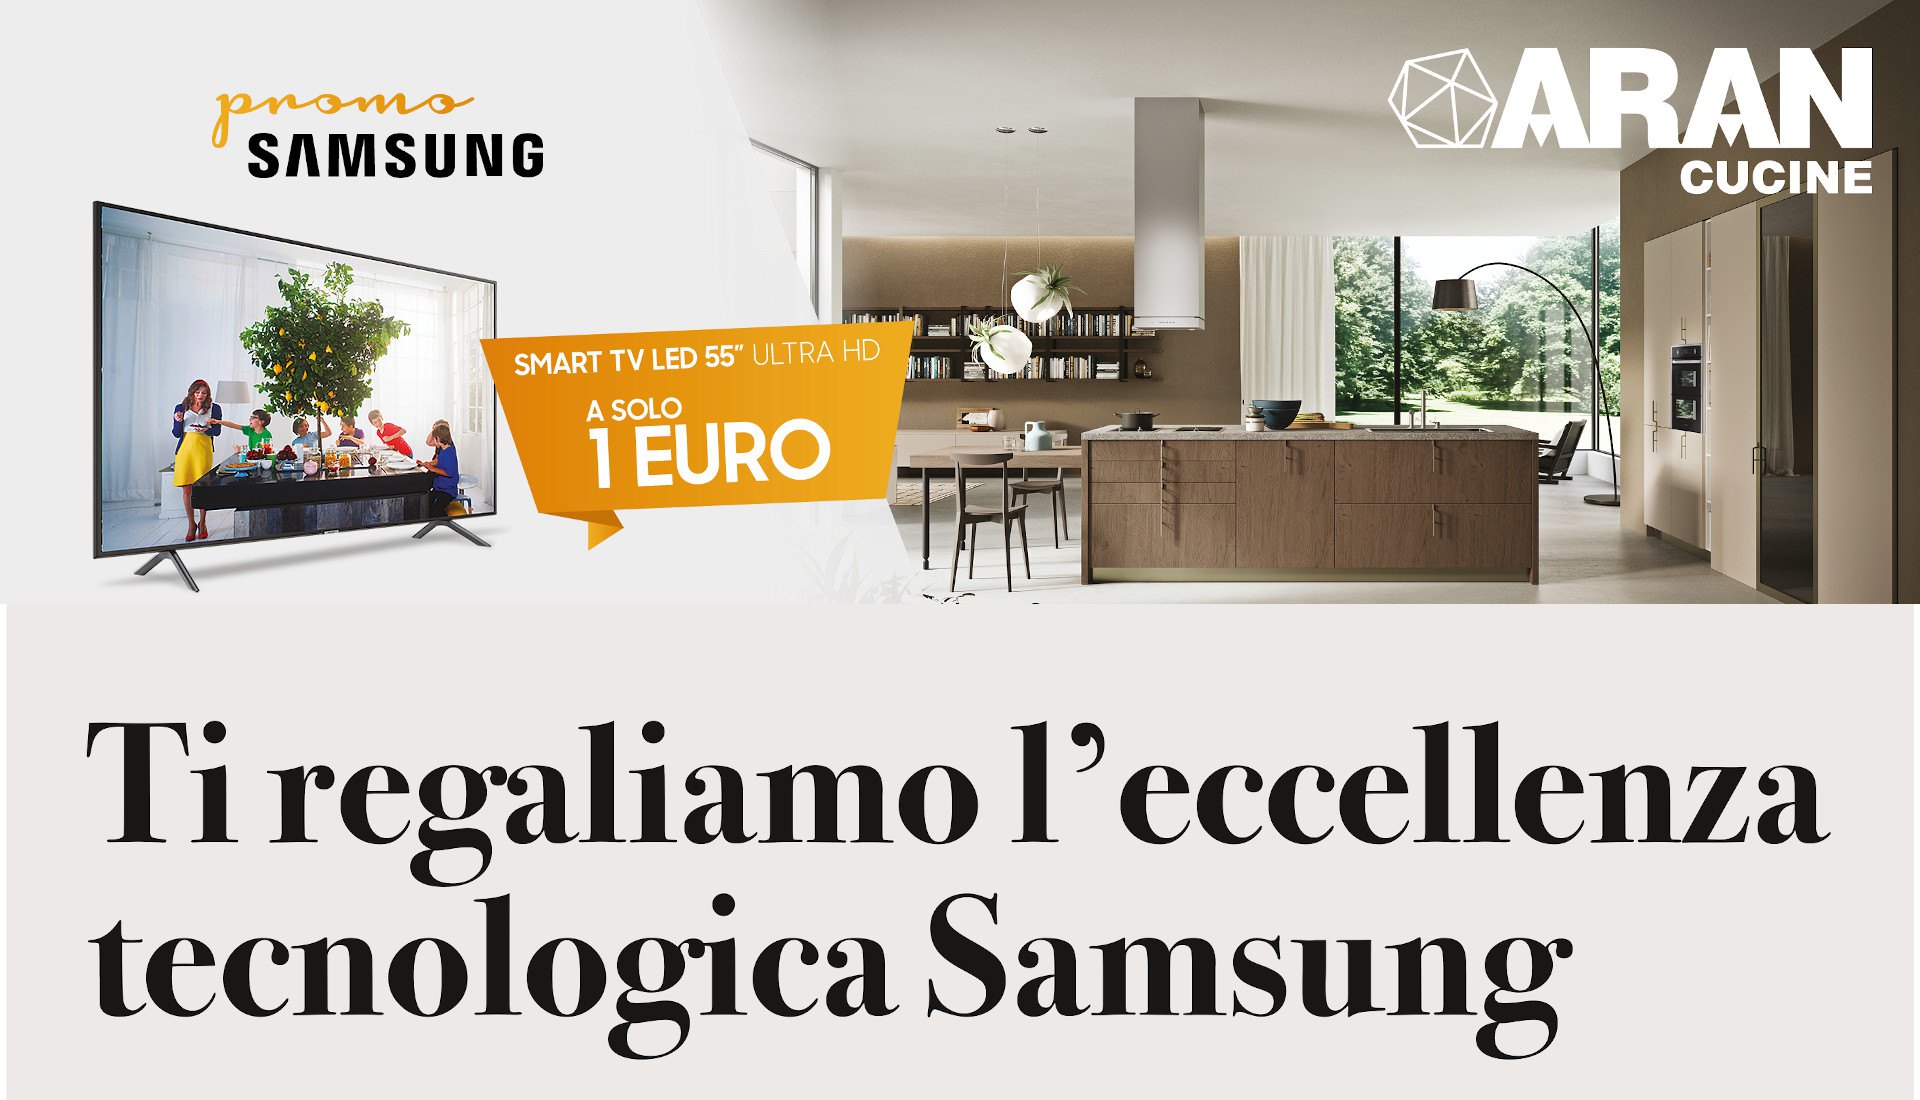 ARAN Cucine: Promo Samsung